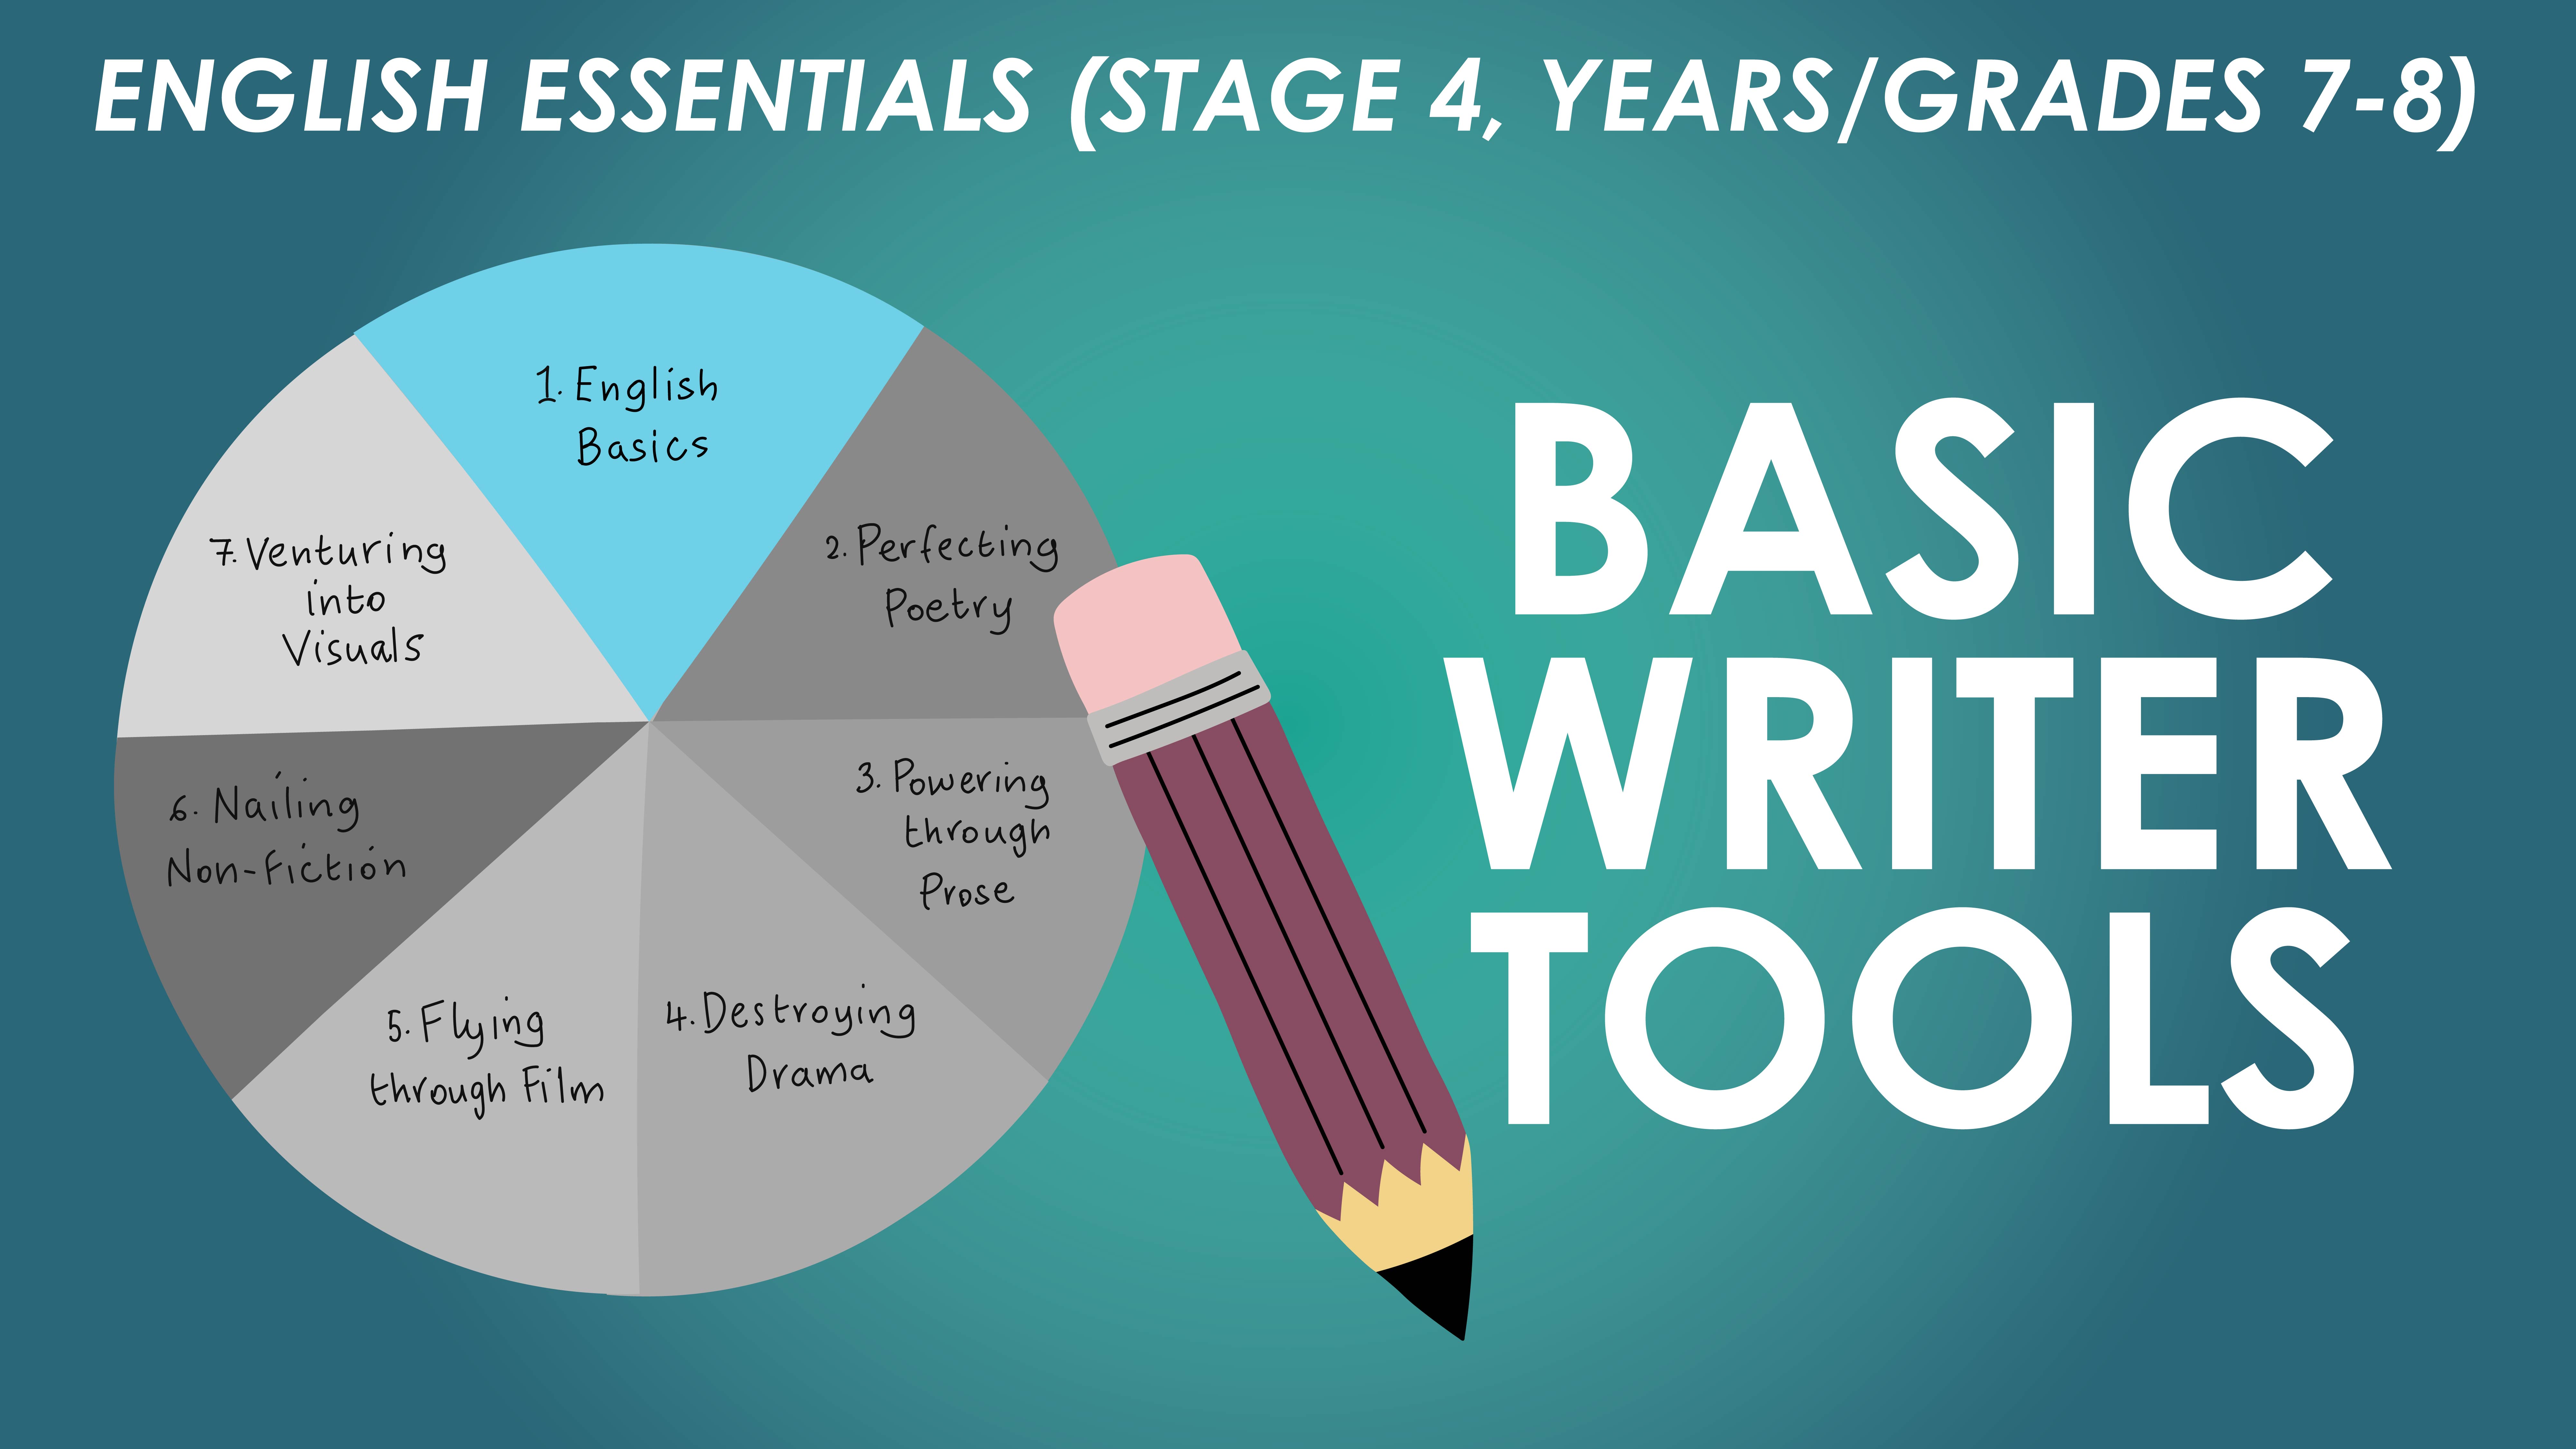 English Essentials - English Basics – Basic Writer Tools (Stage 4, Years/Grades 7-8)